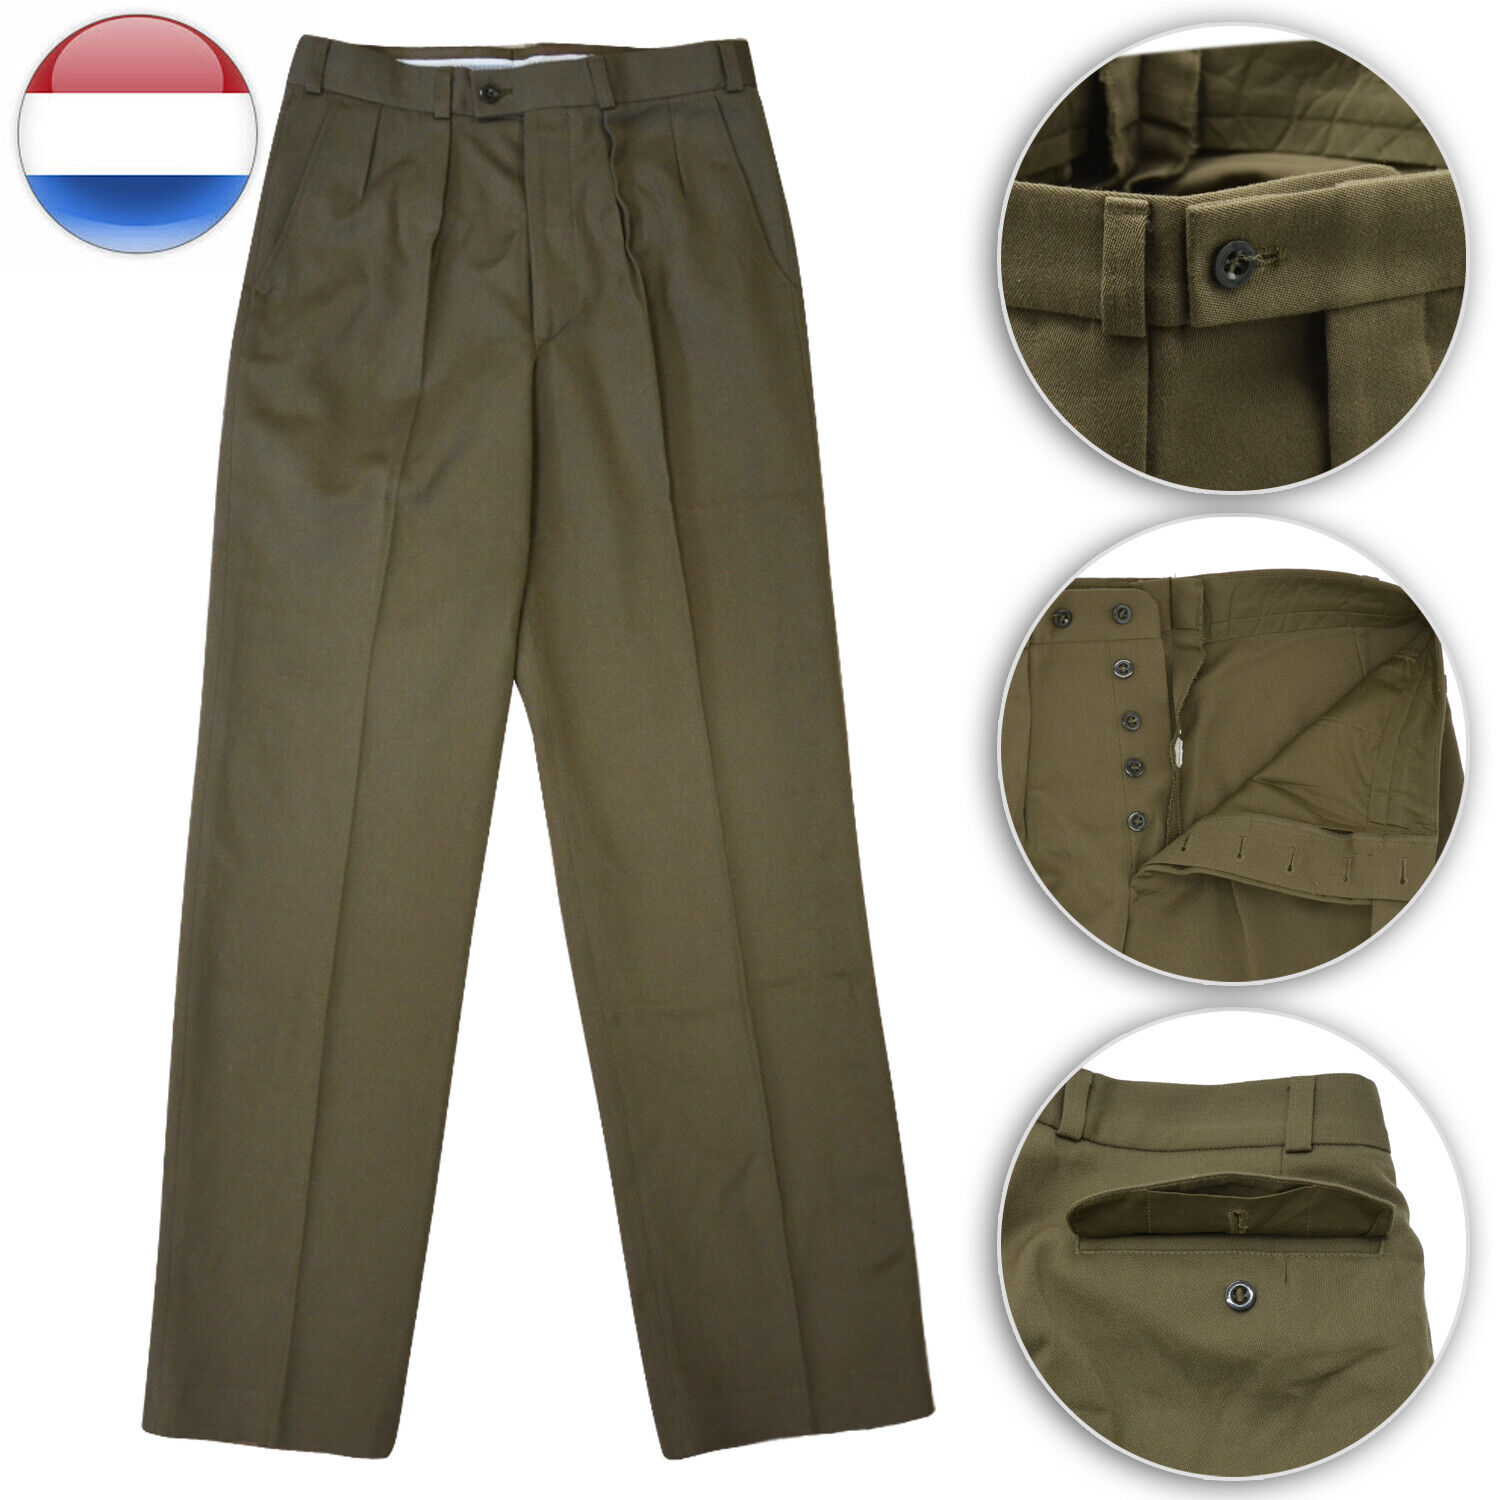 Wool 75% Dutch Army Trousers Pants Brown Khaki Dress Uniform Casual Retro Style